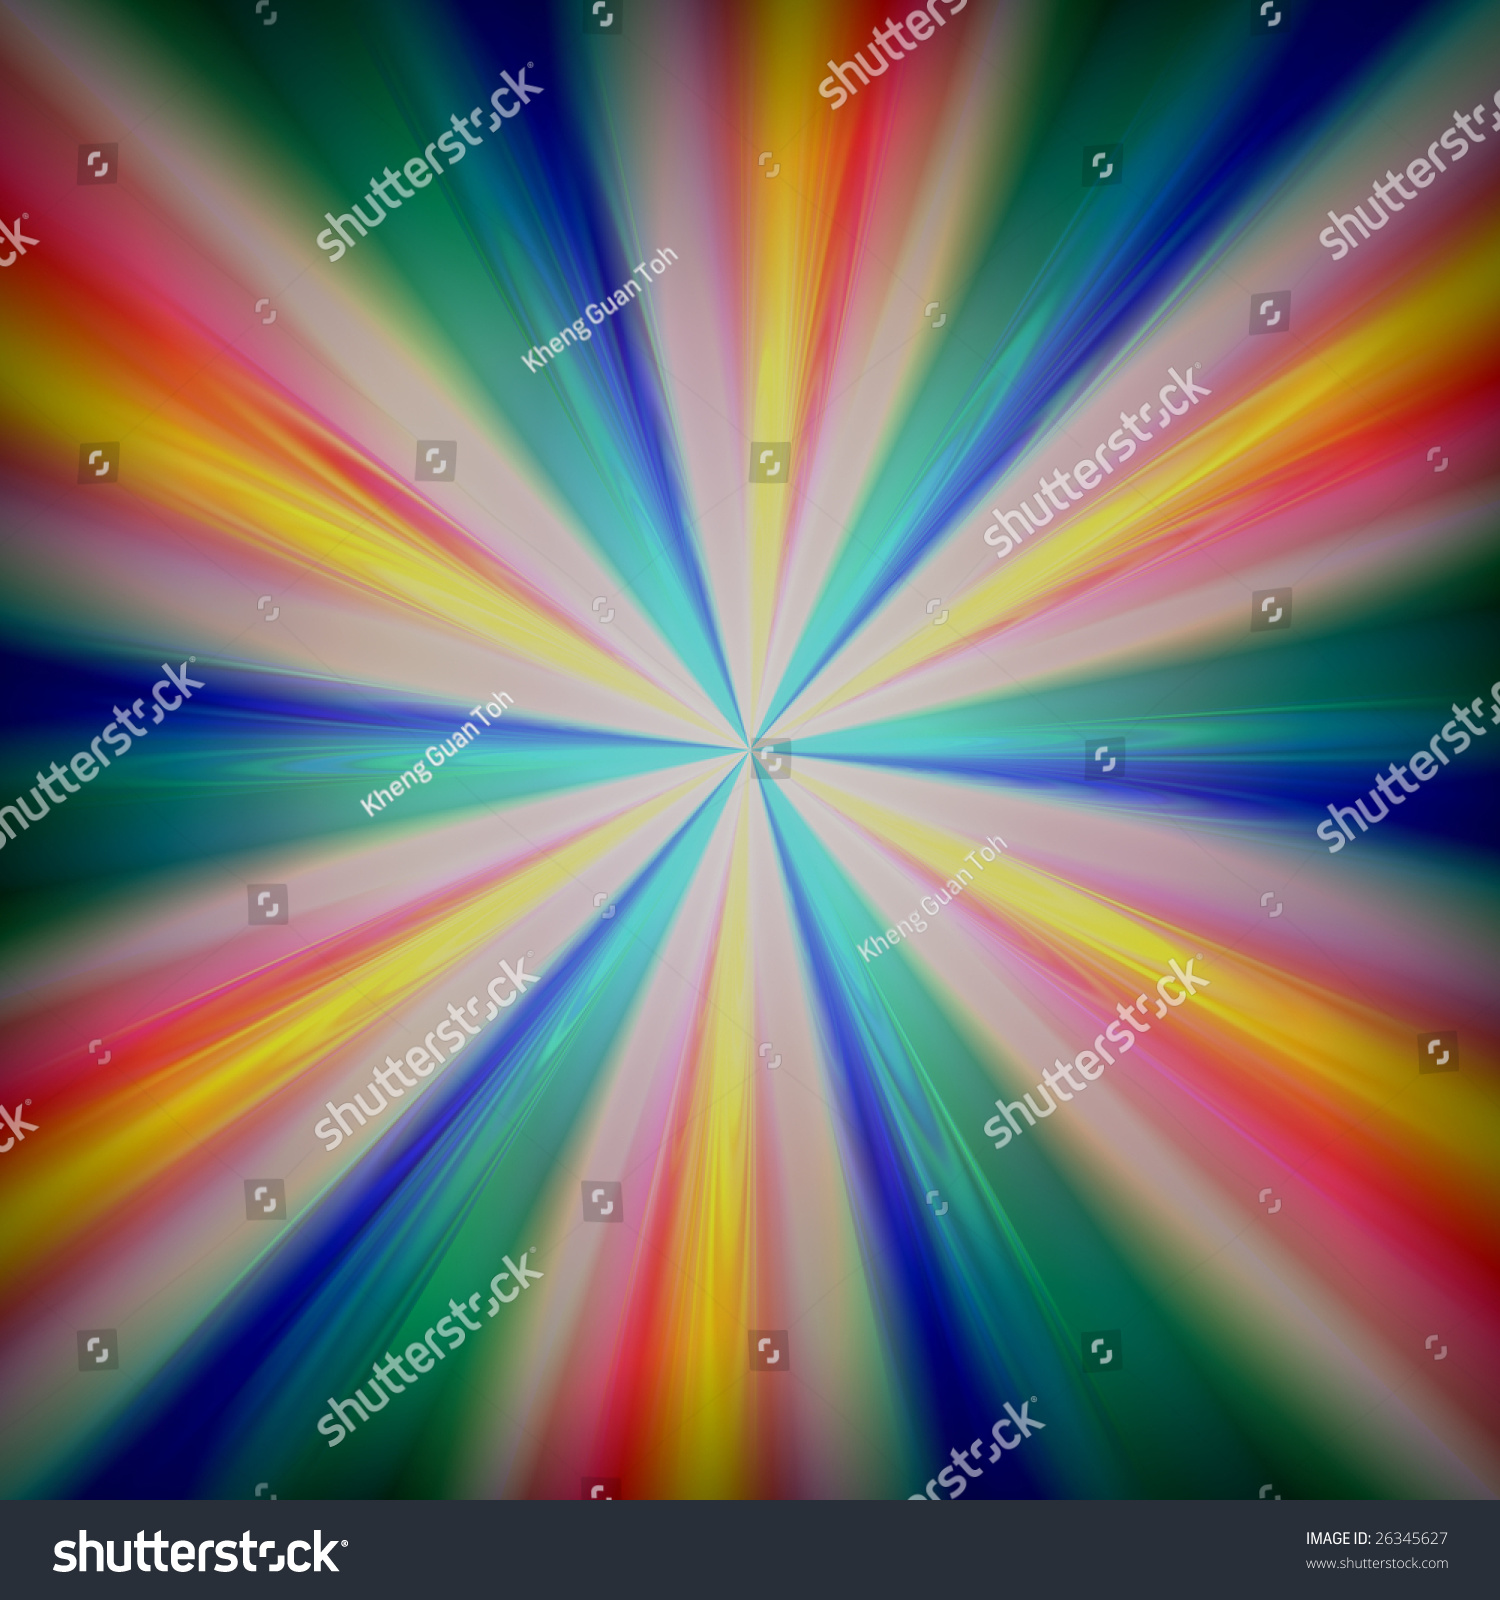 Radial Zoom Burst Energy Abstract Background Stock Illustration ...